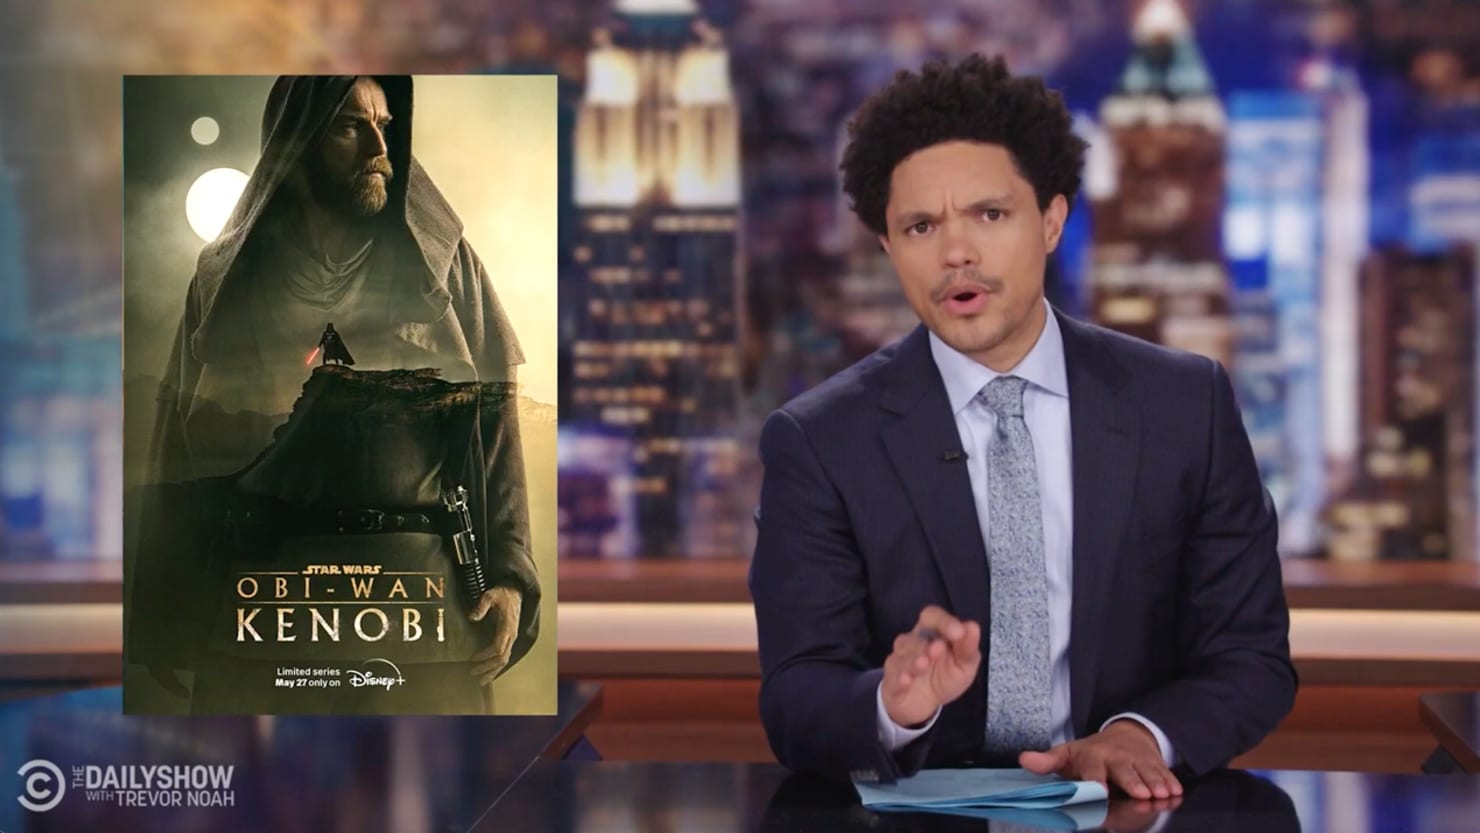 Moses Ingram - Obi-Wan Kenobi - The Daily Show with Trevor Noah (Video  Clip)